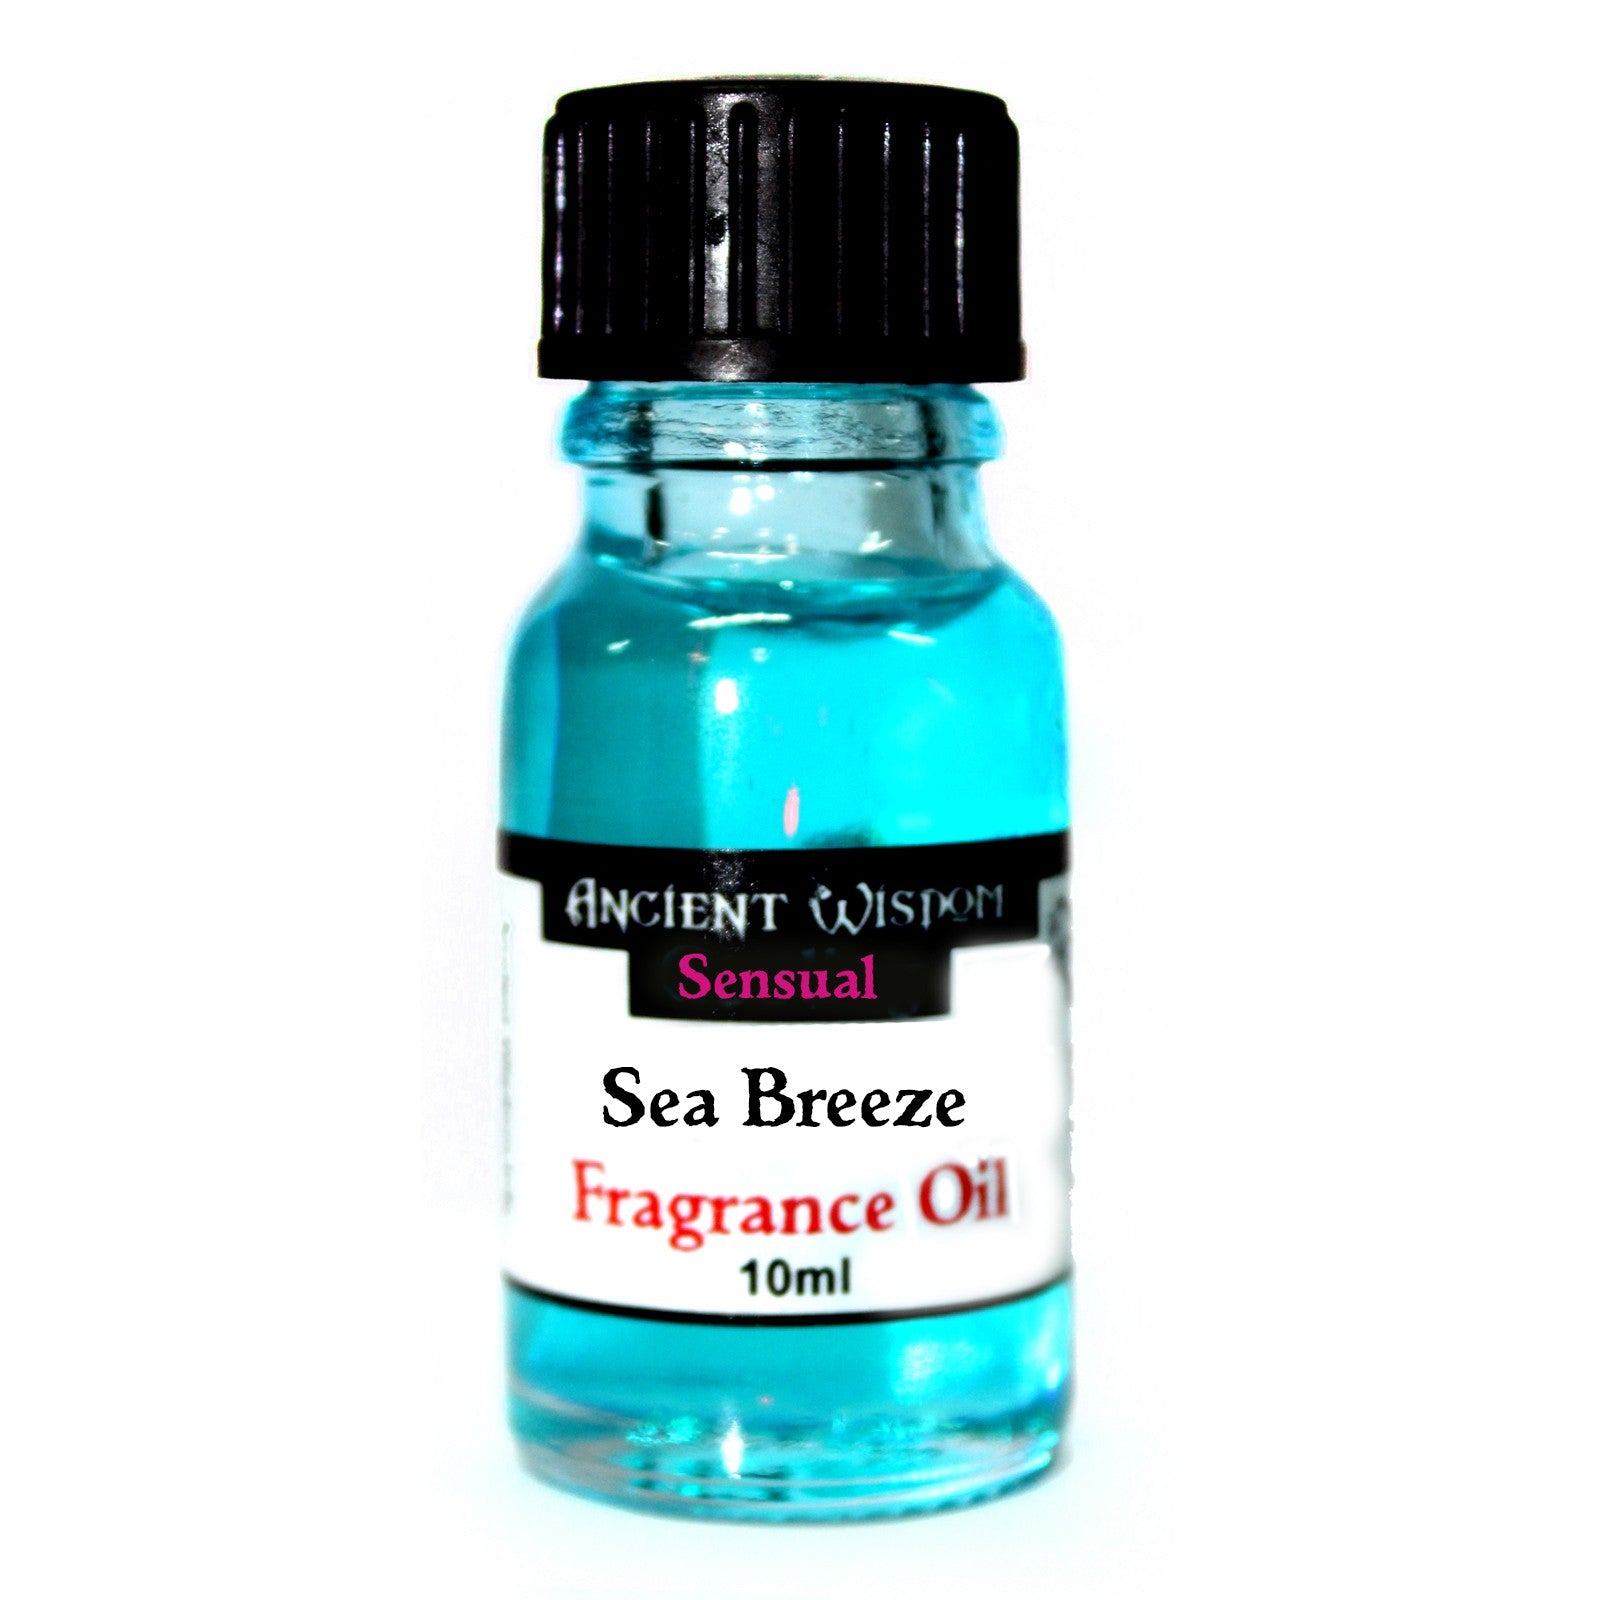 View 10ml Sea Breeze Fragrance Oil information